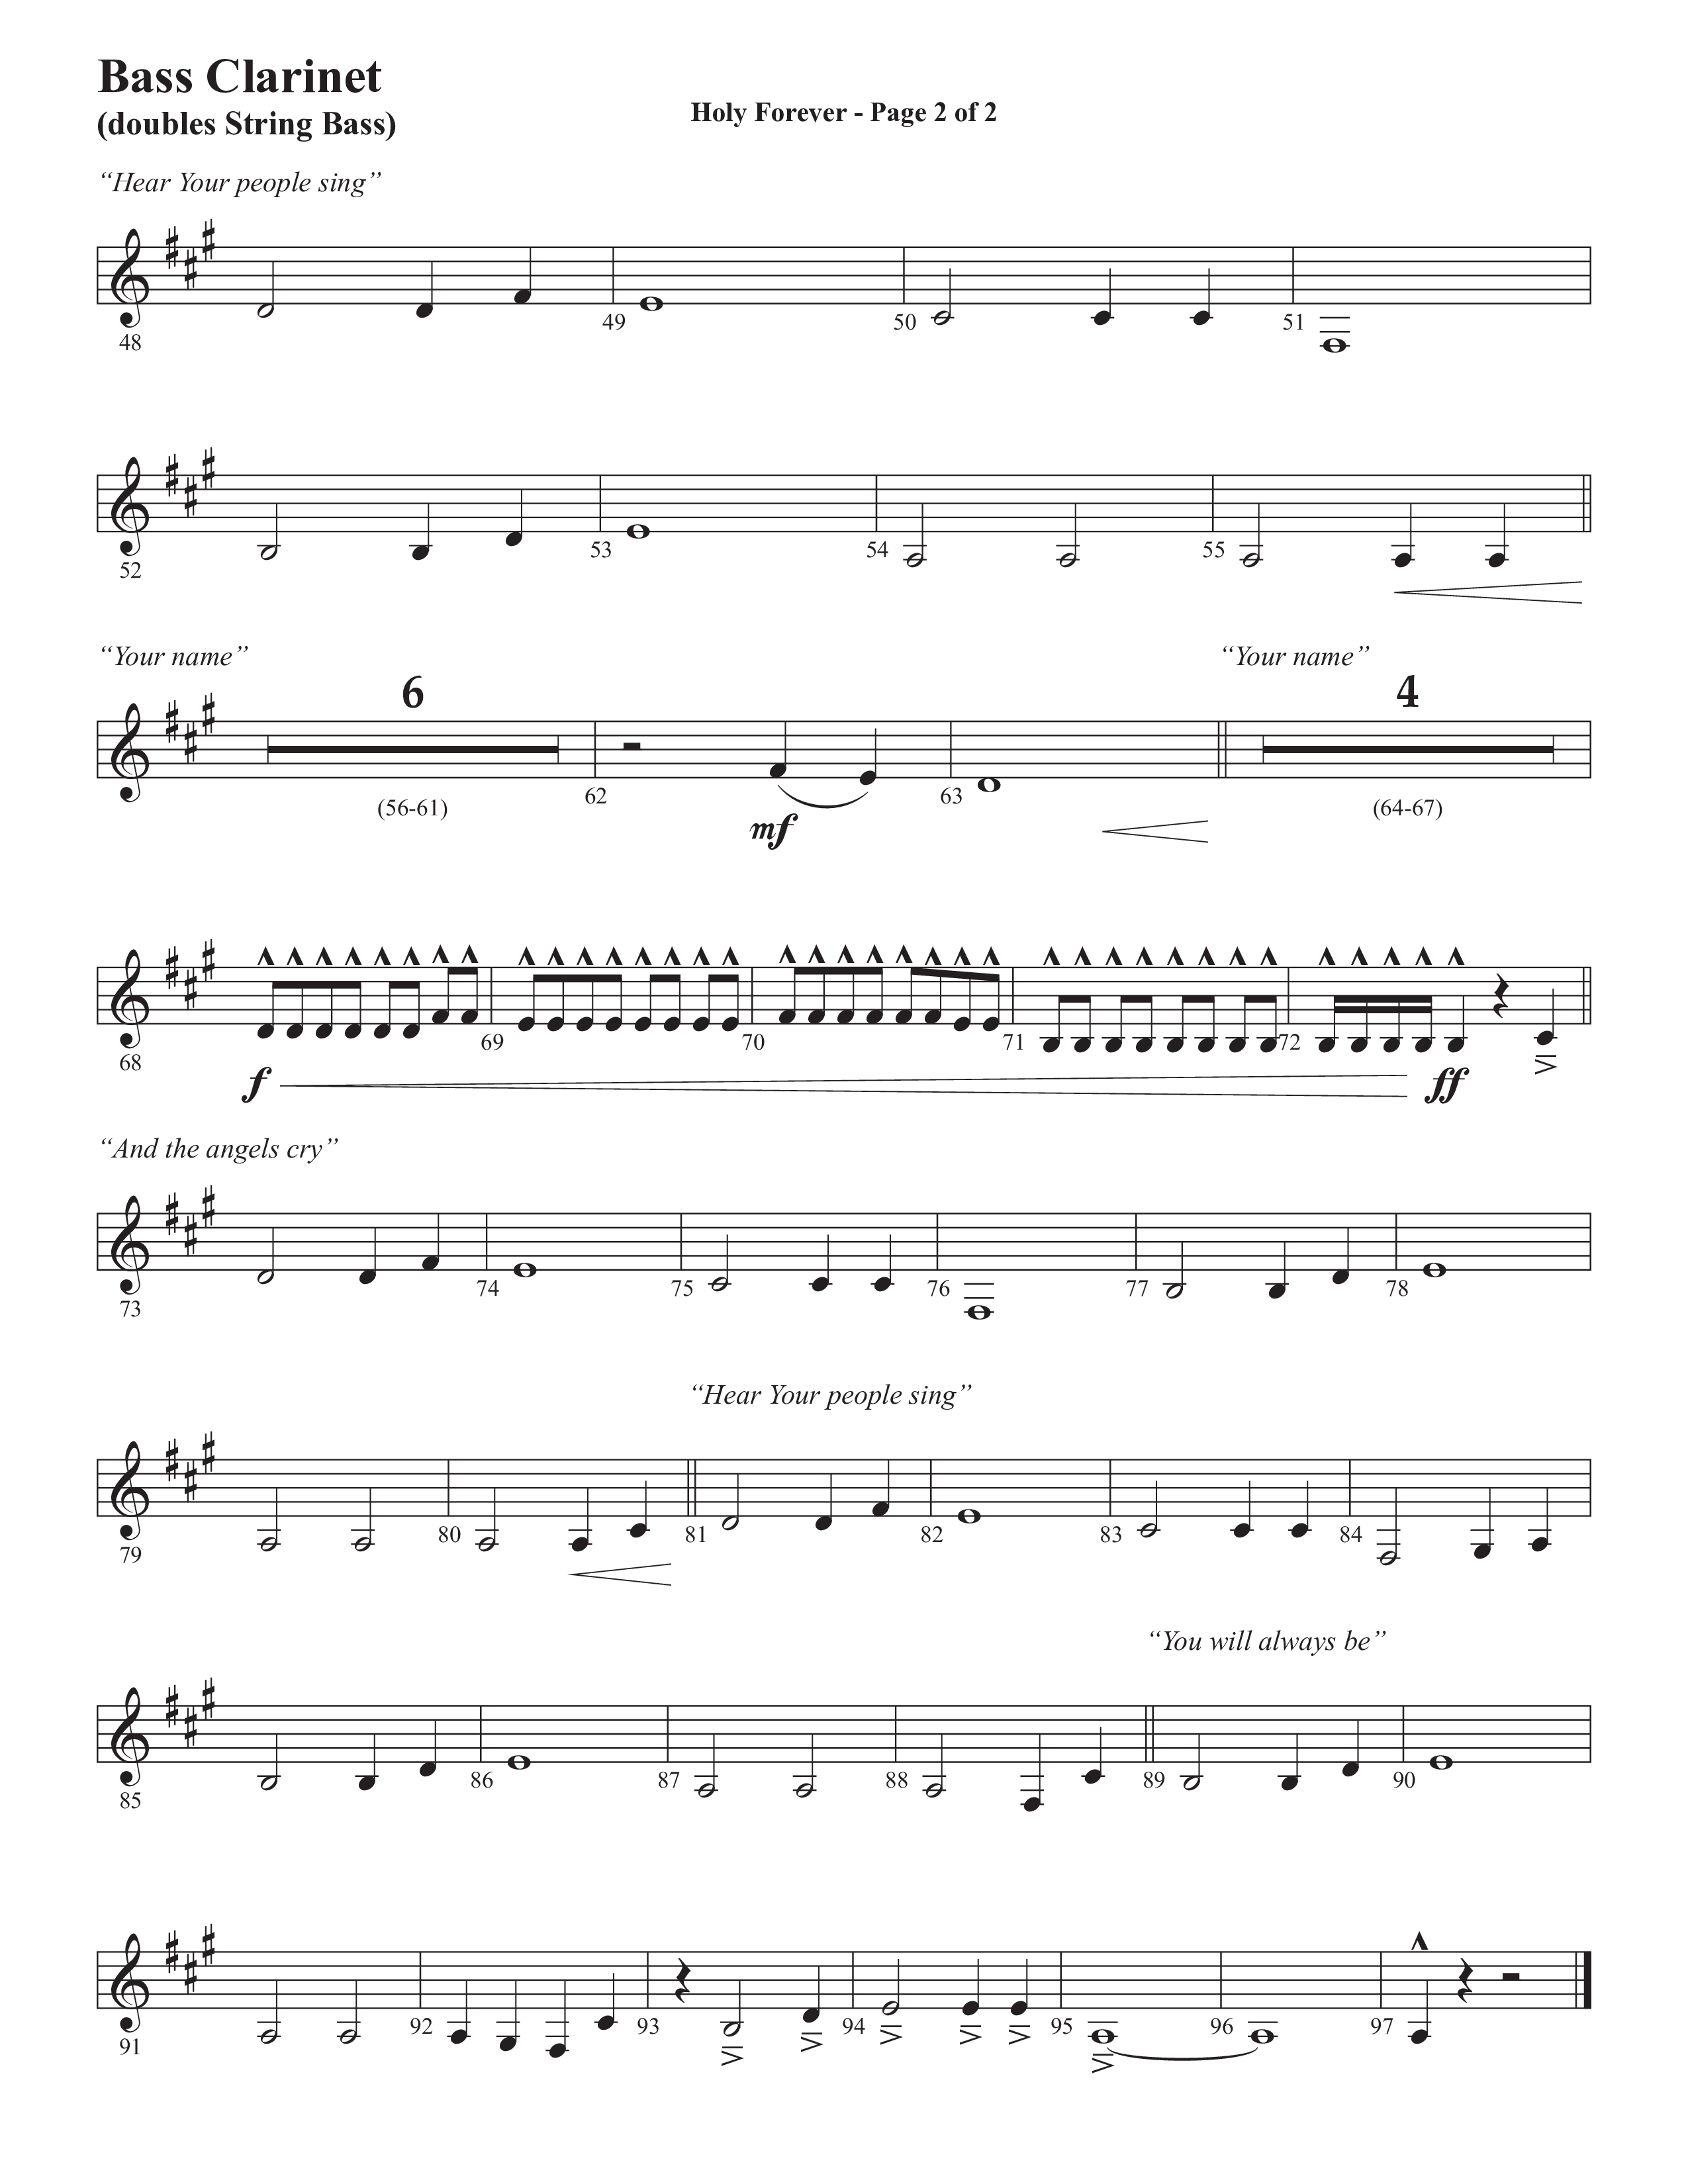 Holy Forever (Choral Anthem SATB) Bass Clarinet (Semsen Music / Arr. Cliff Duren)